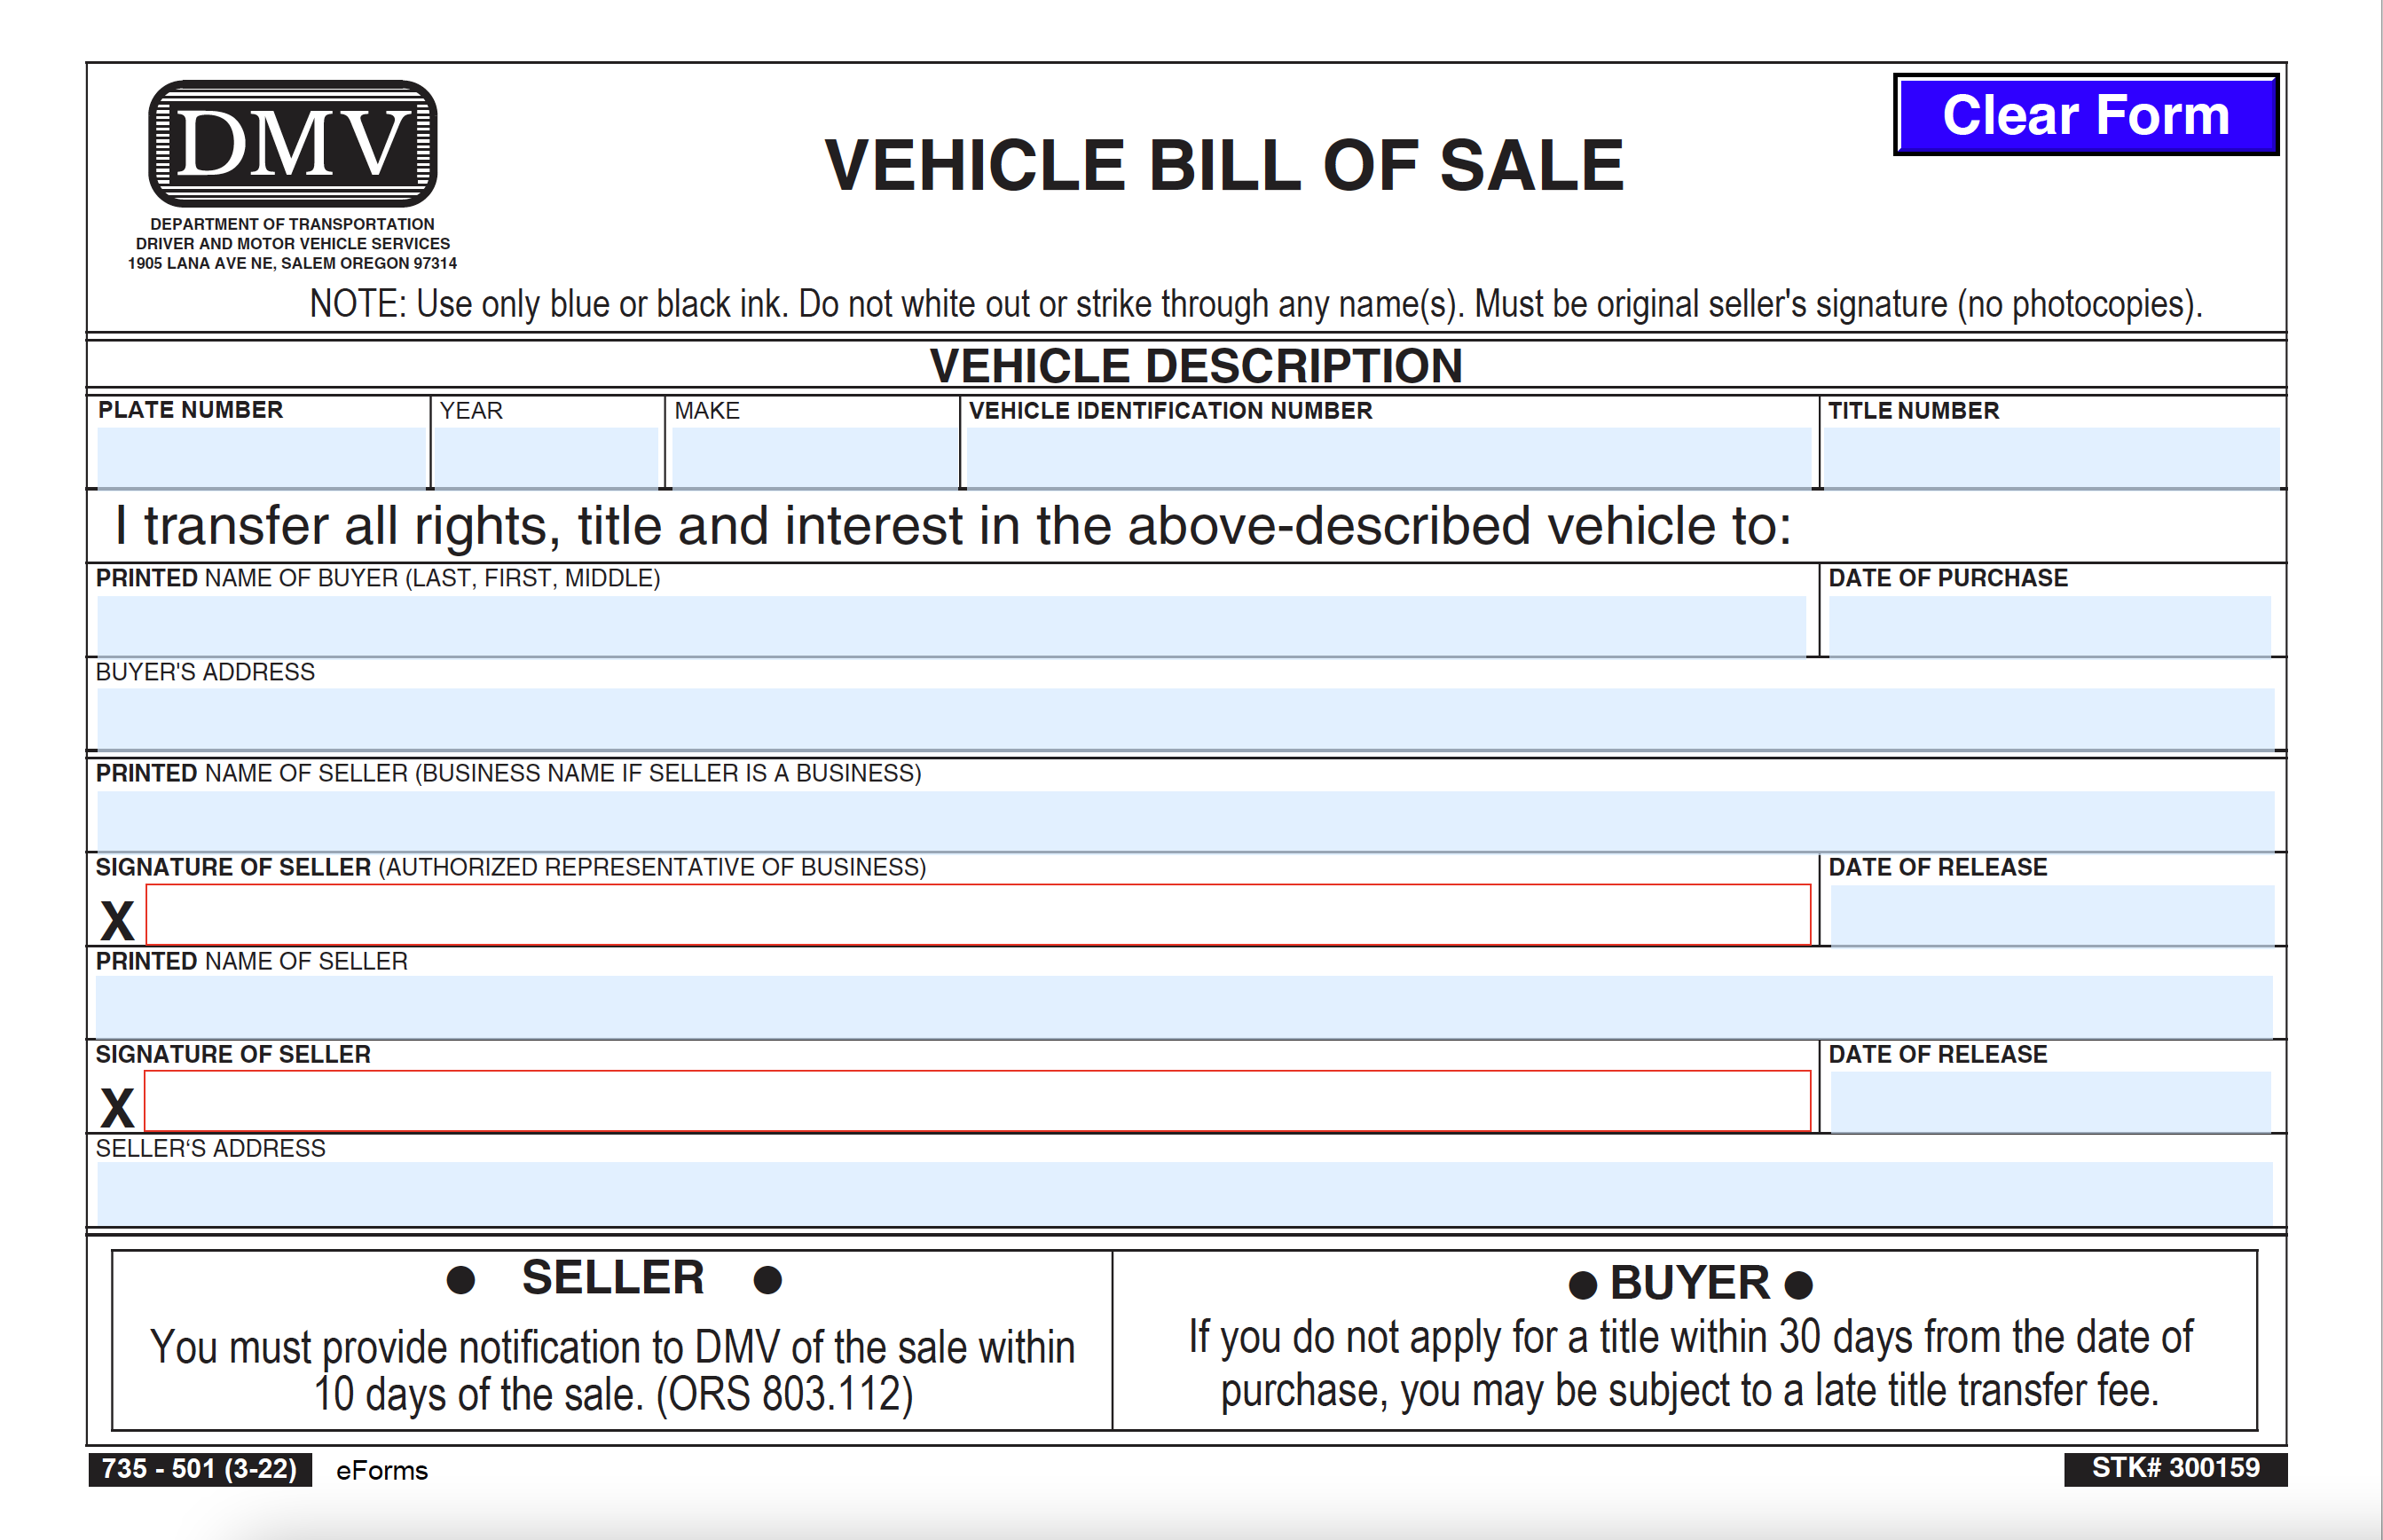 Oregon Motor Vehicle Bill of Sale | Form 735-501